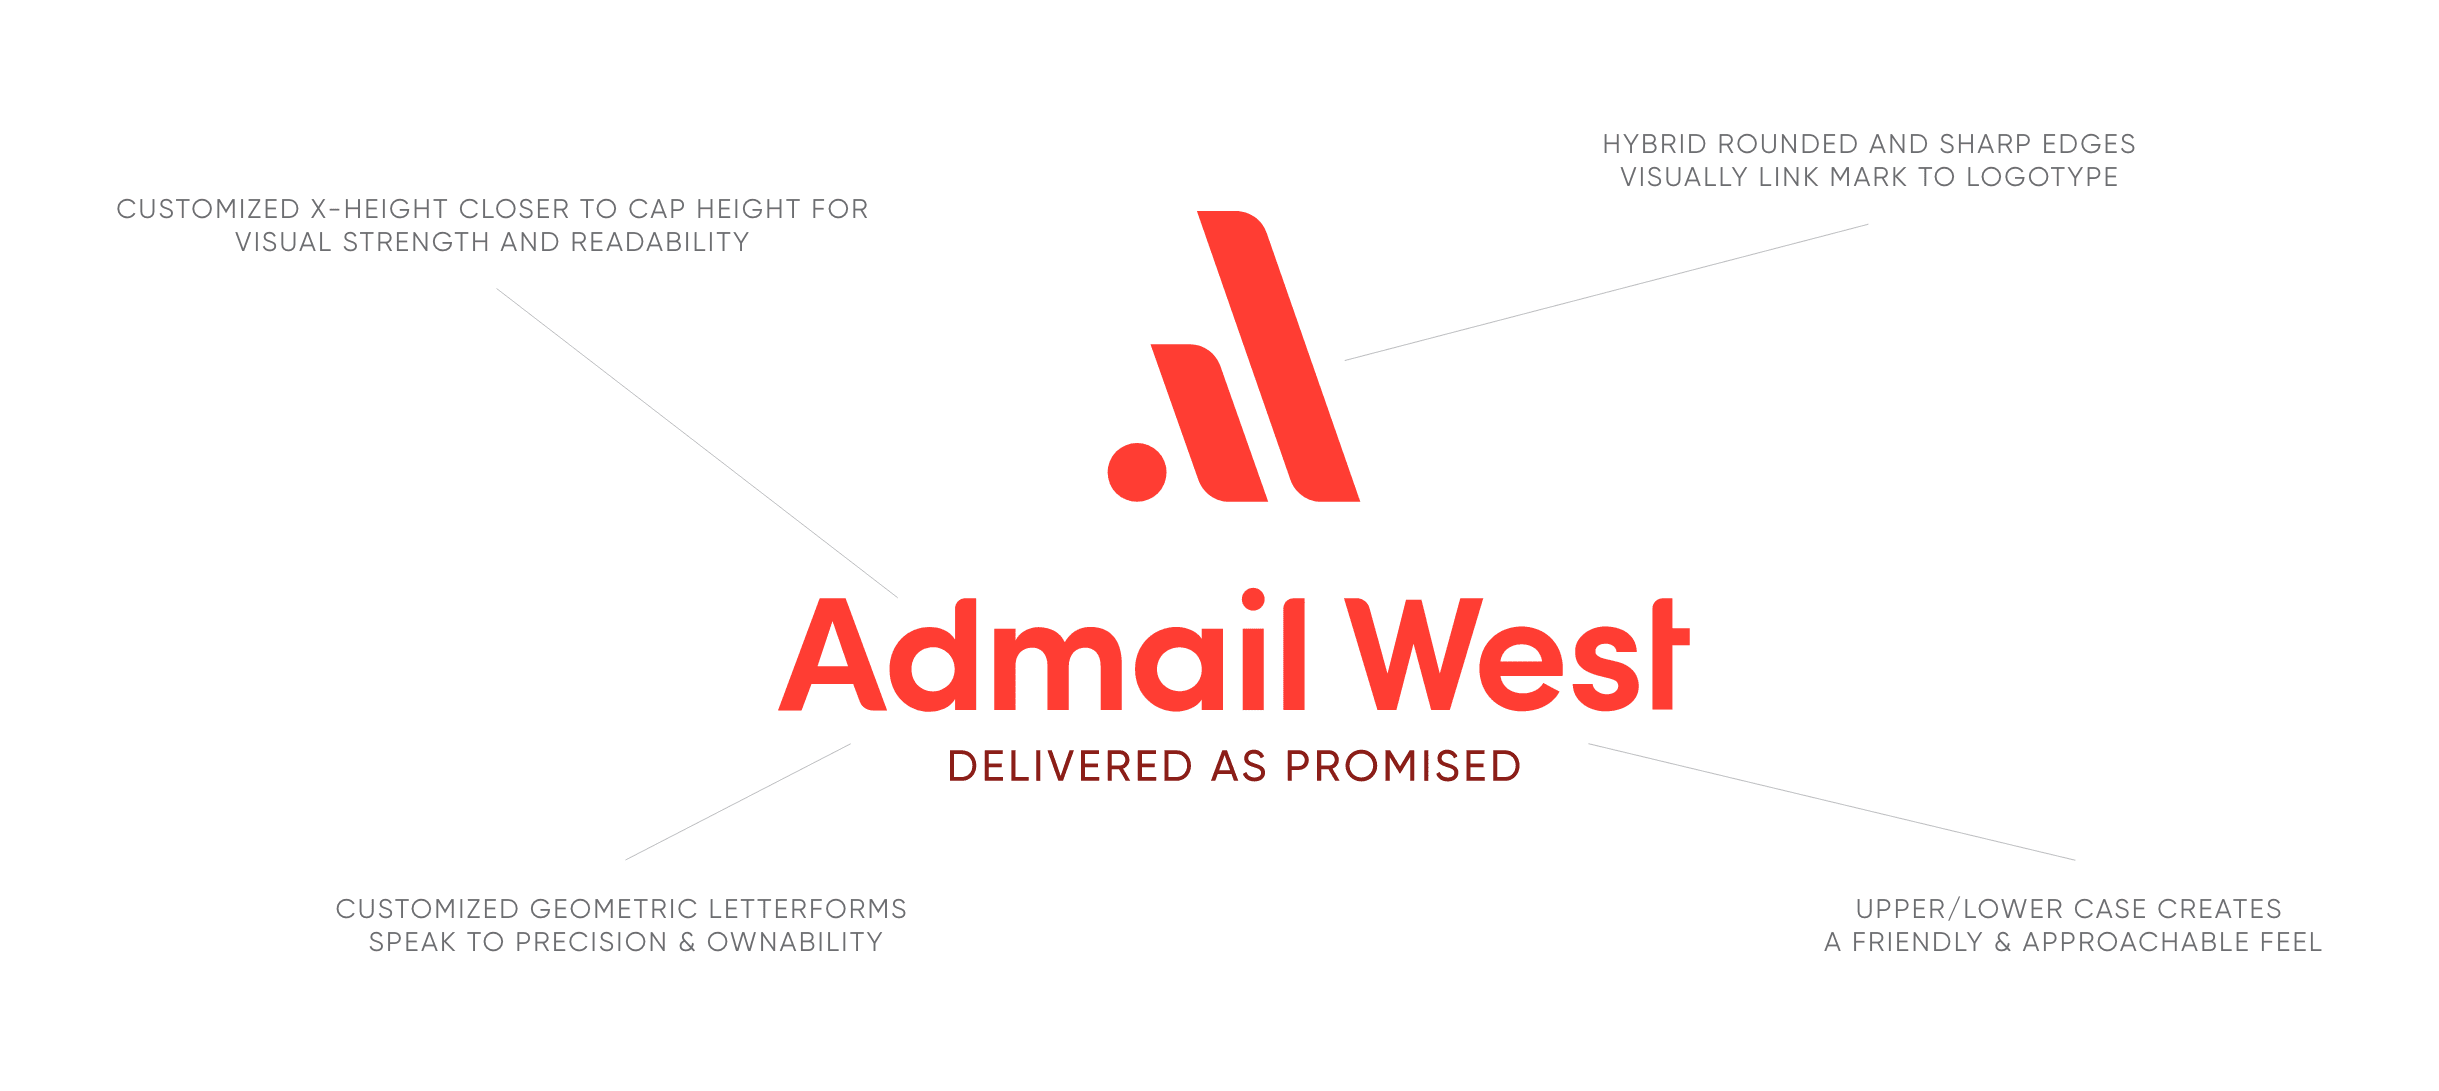 Anatomy of the Admail West logo